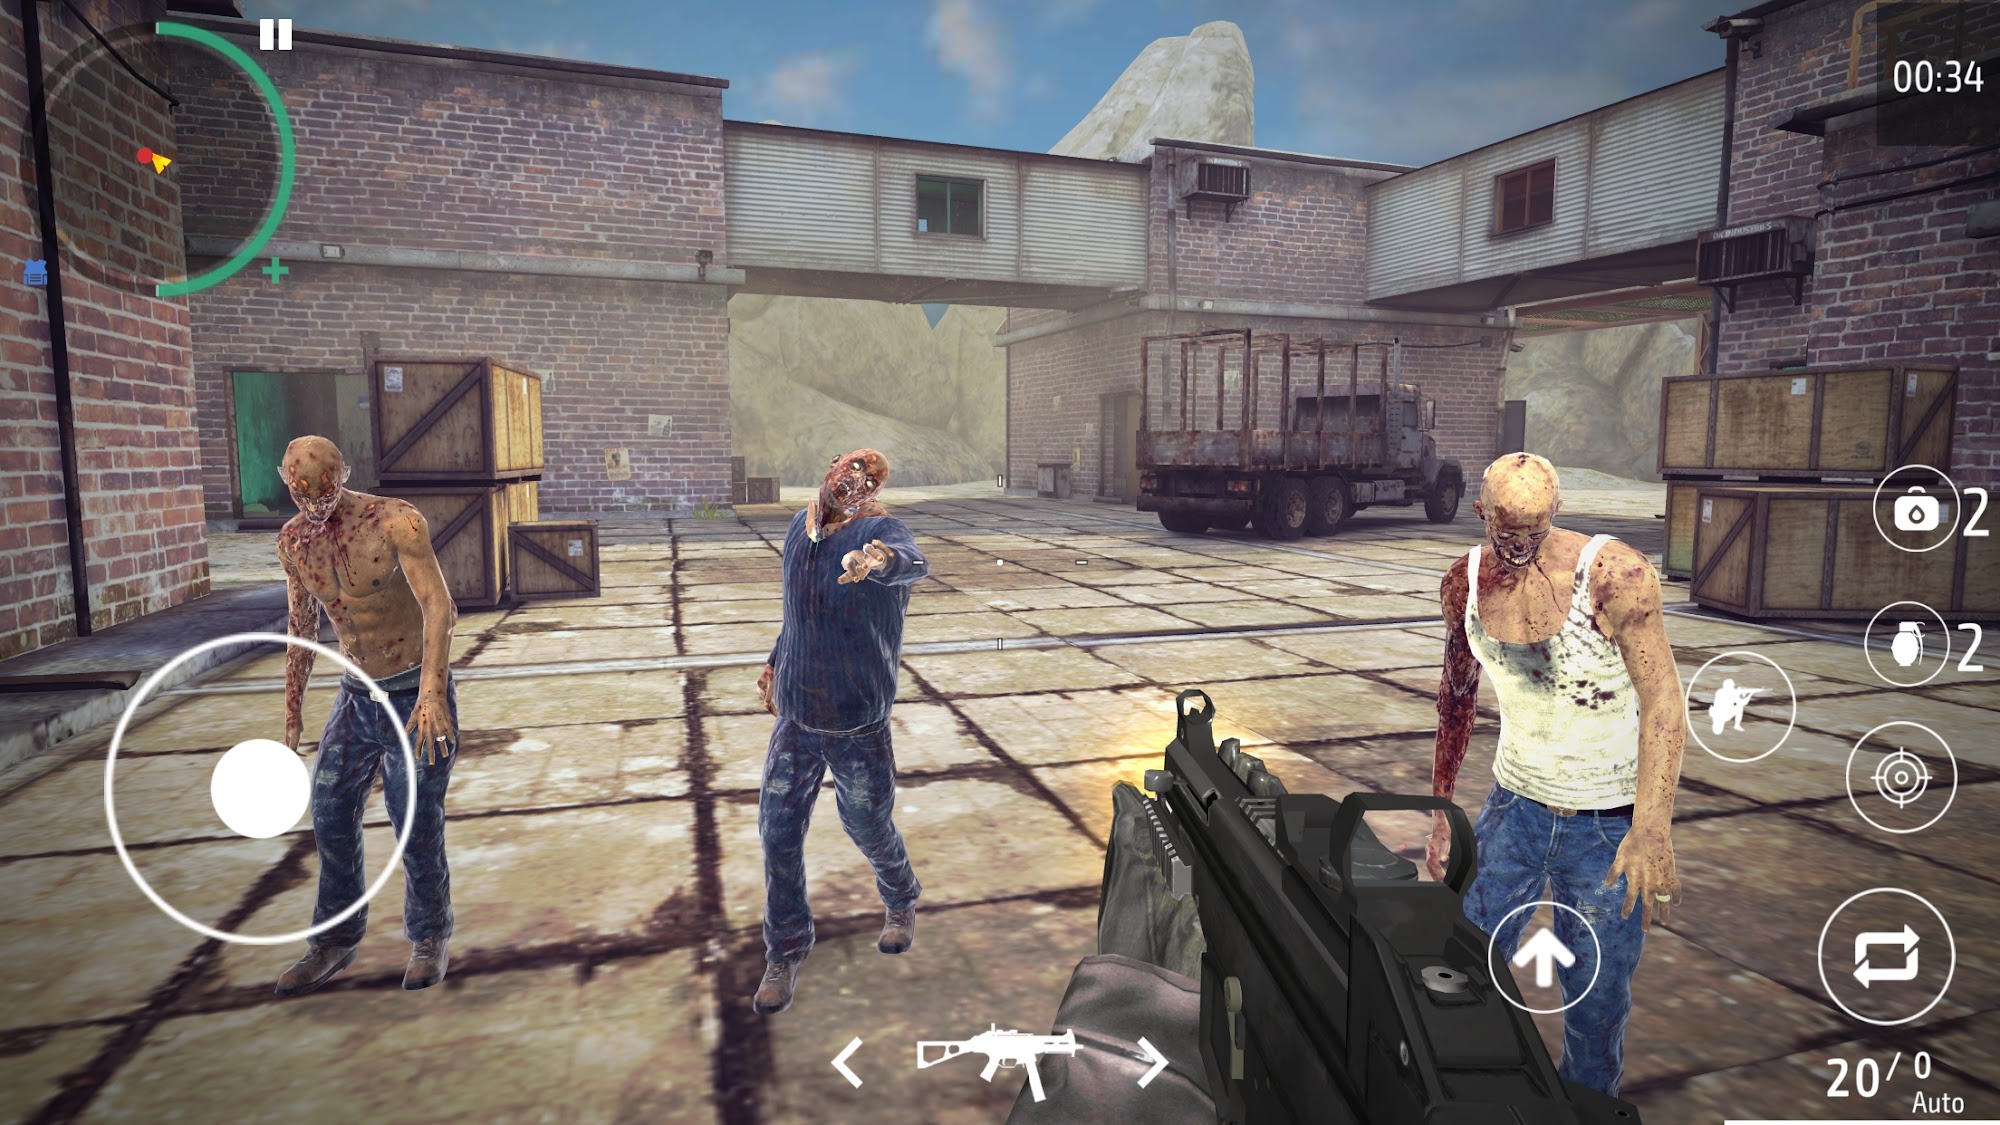 Download Zombie Shooter - fps games für Android kostenlos.